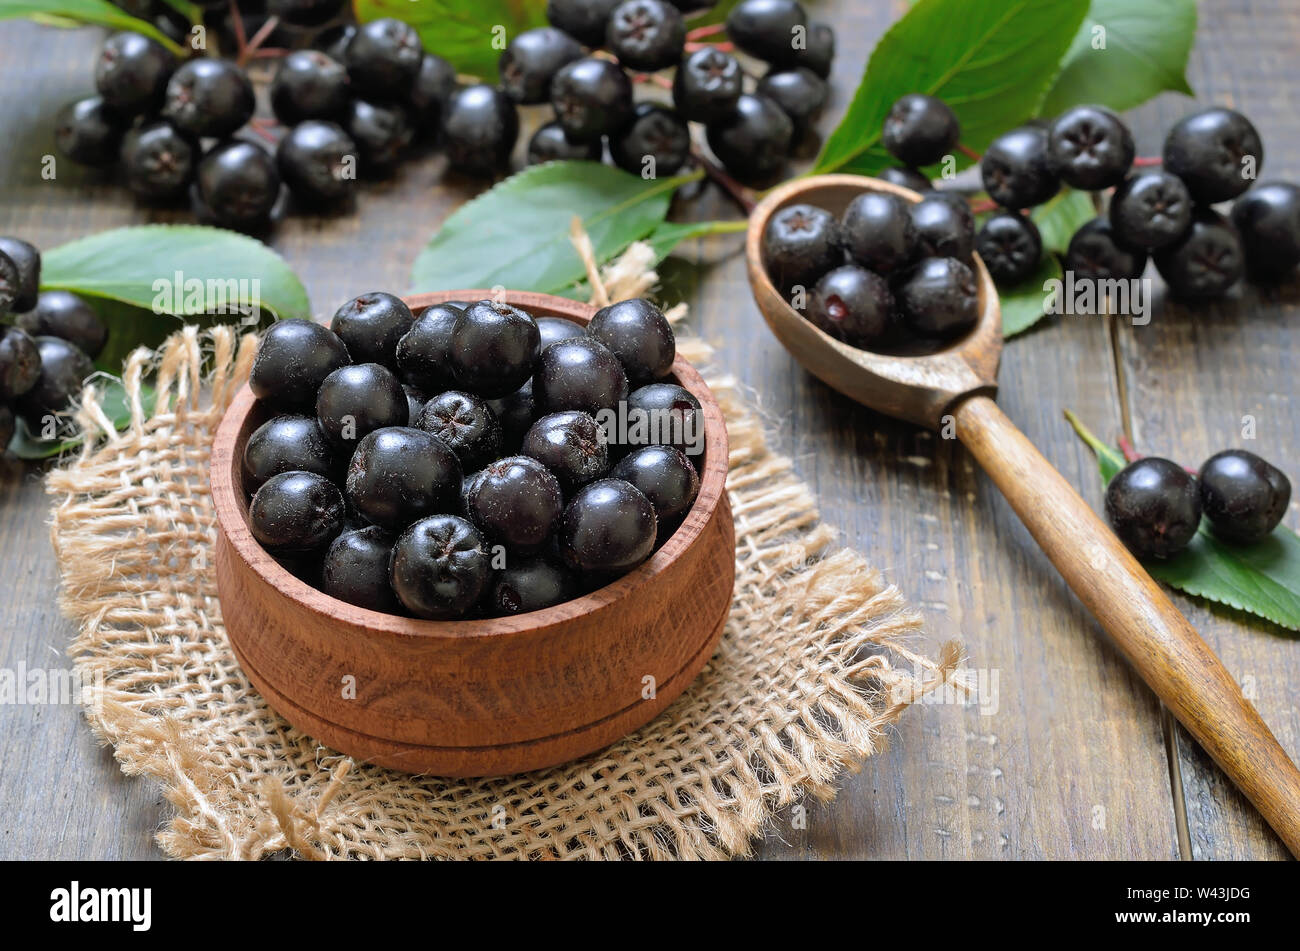 Black chokeberry (Aronia melanocarpa) in wooden bowl, close up view Stock Photo